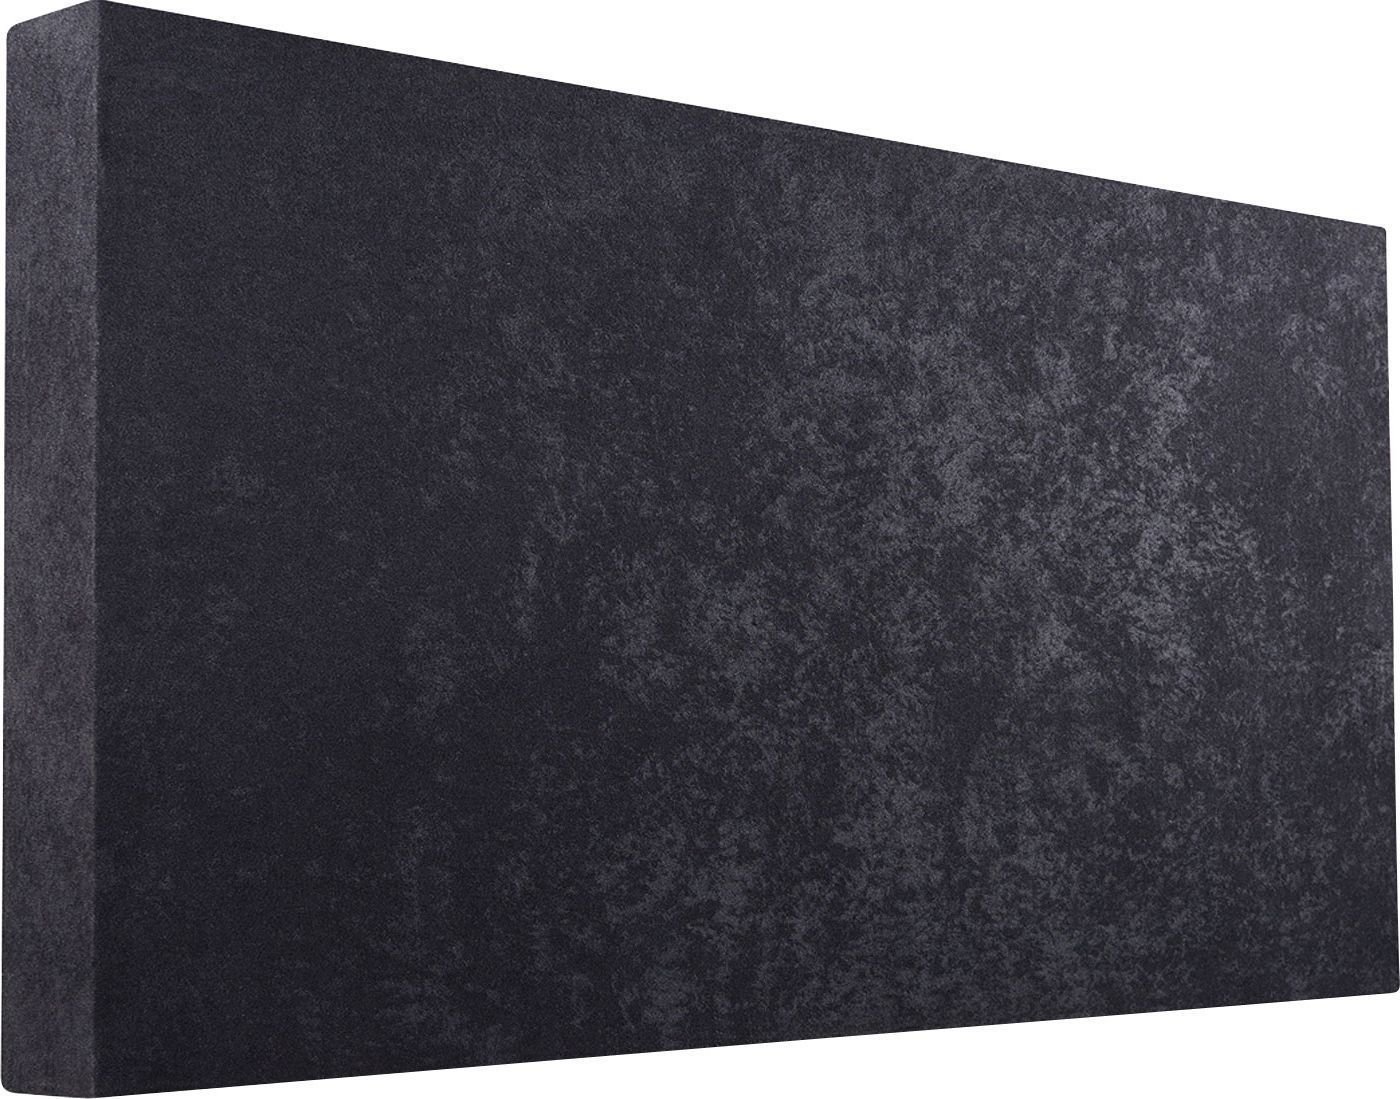 Absorbent wood panel Mega Acoustic Fiberstandard120 Black (Just unboxed)